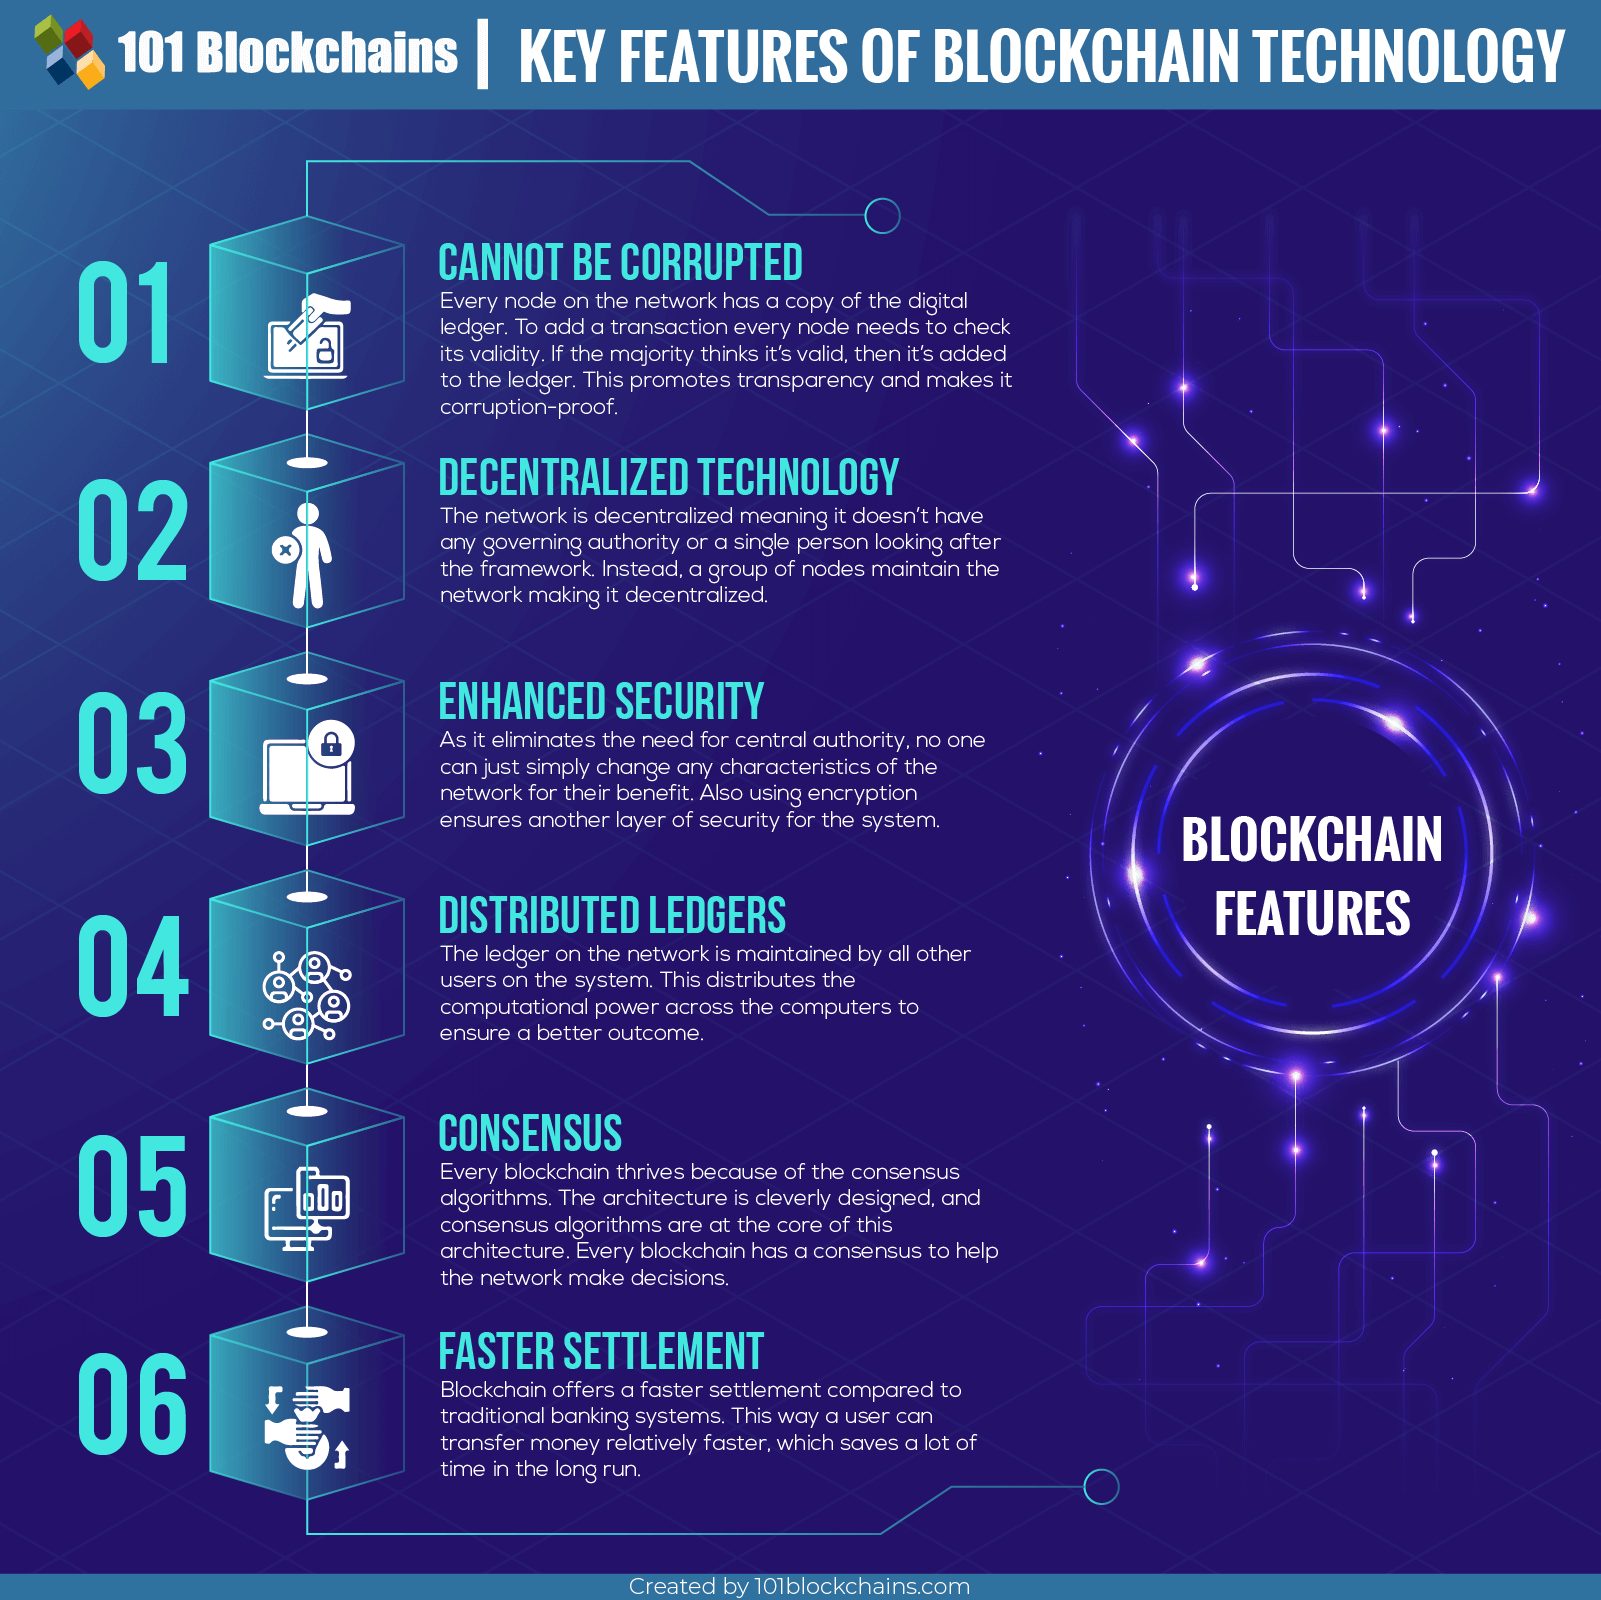 Blockchain Technology Features